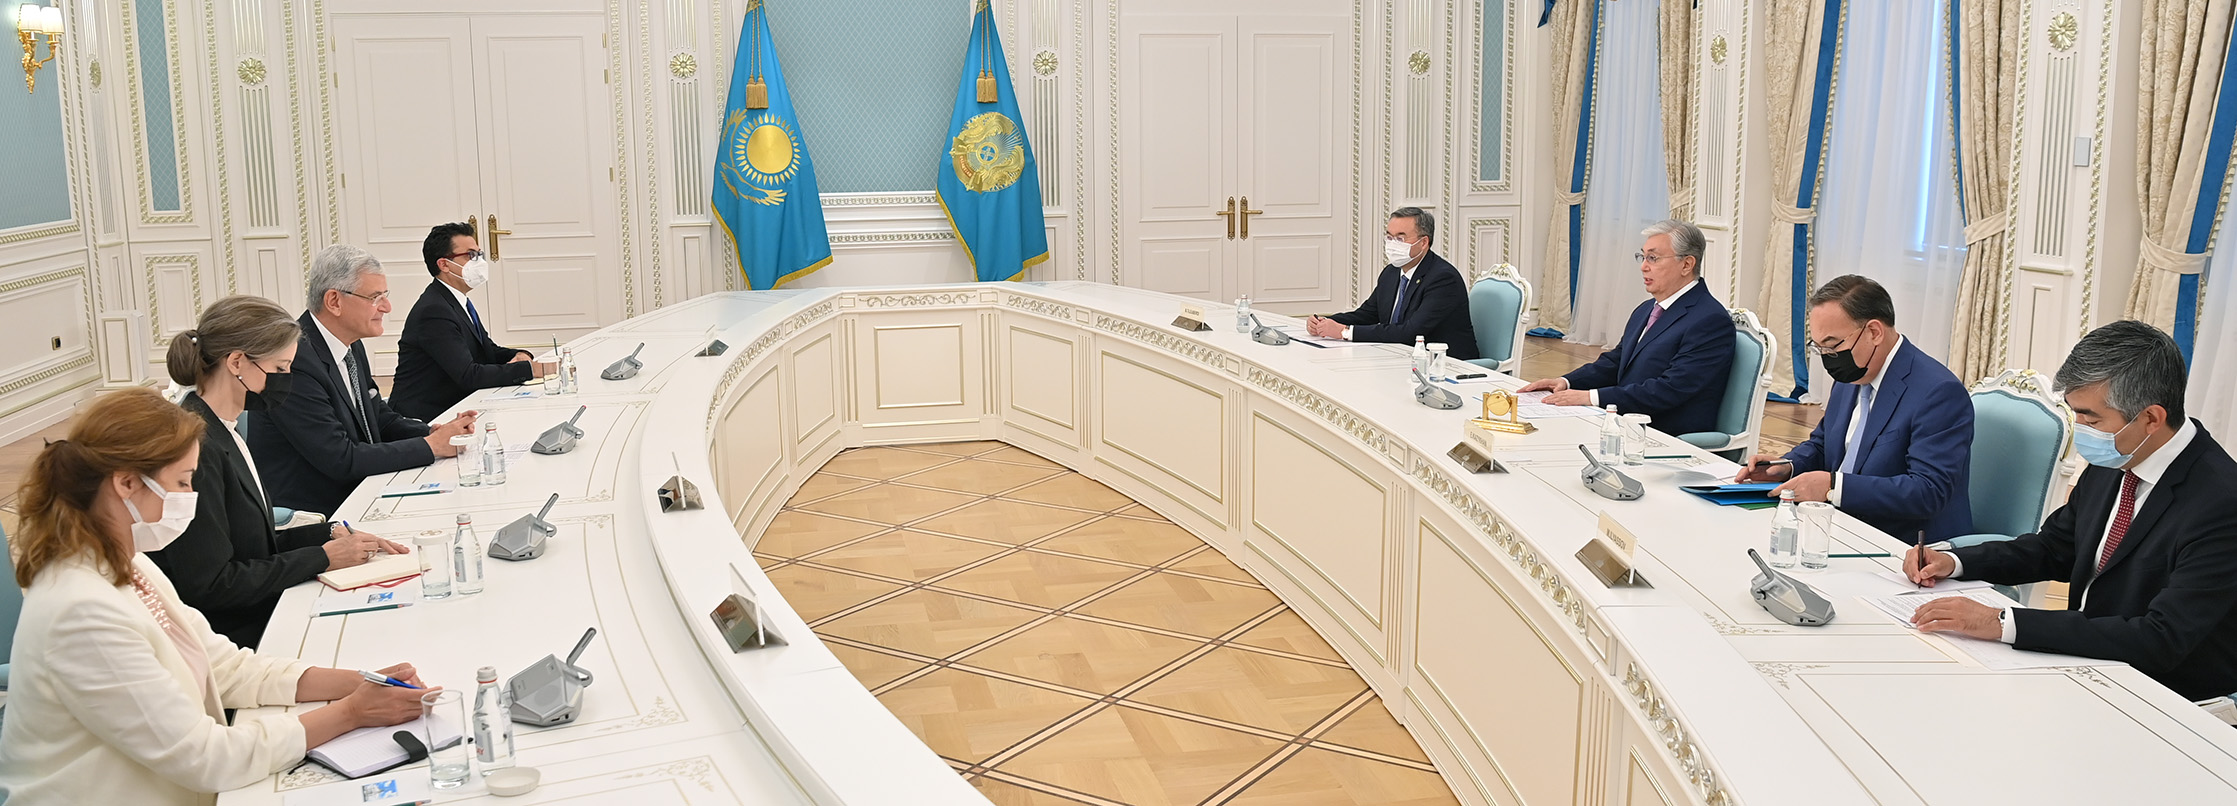 UNGA Chairman Visits Kazakhstan as Part of Central Asia Tour - The ...